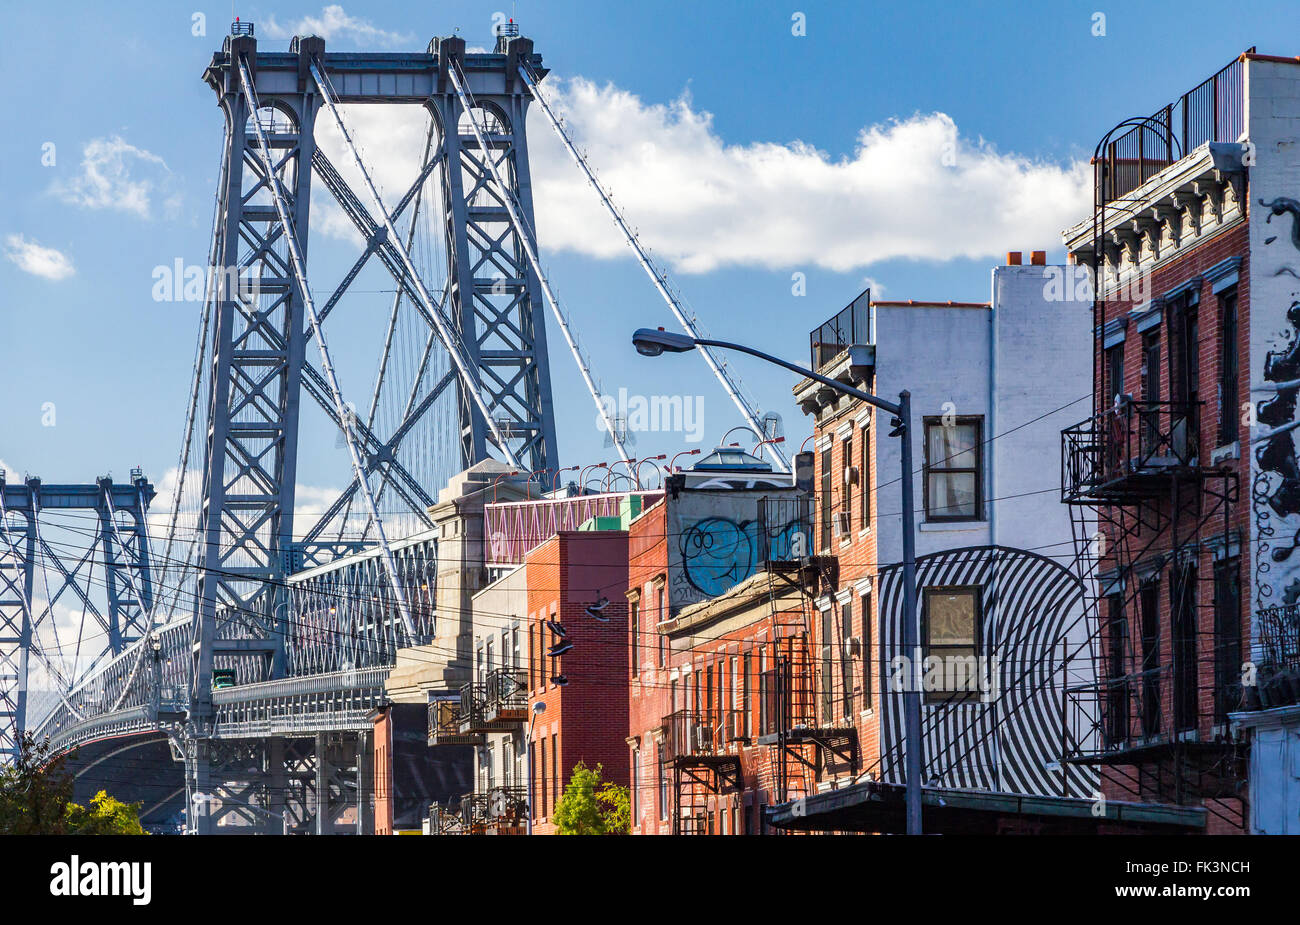 Brooklyn street scene with block of buildings near the Williamsburg Bridge in New York City Stock Photo